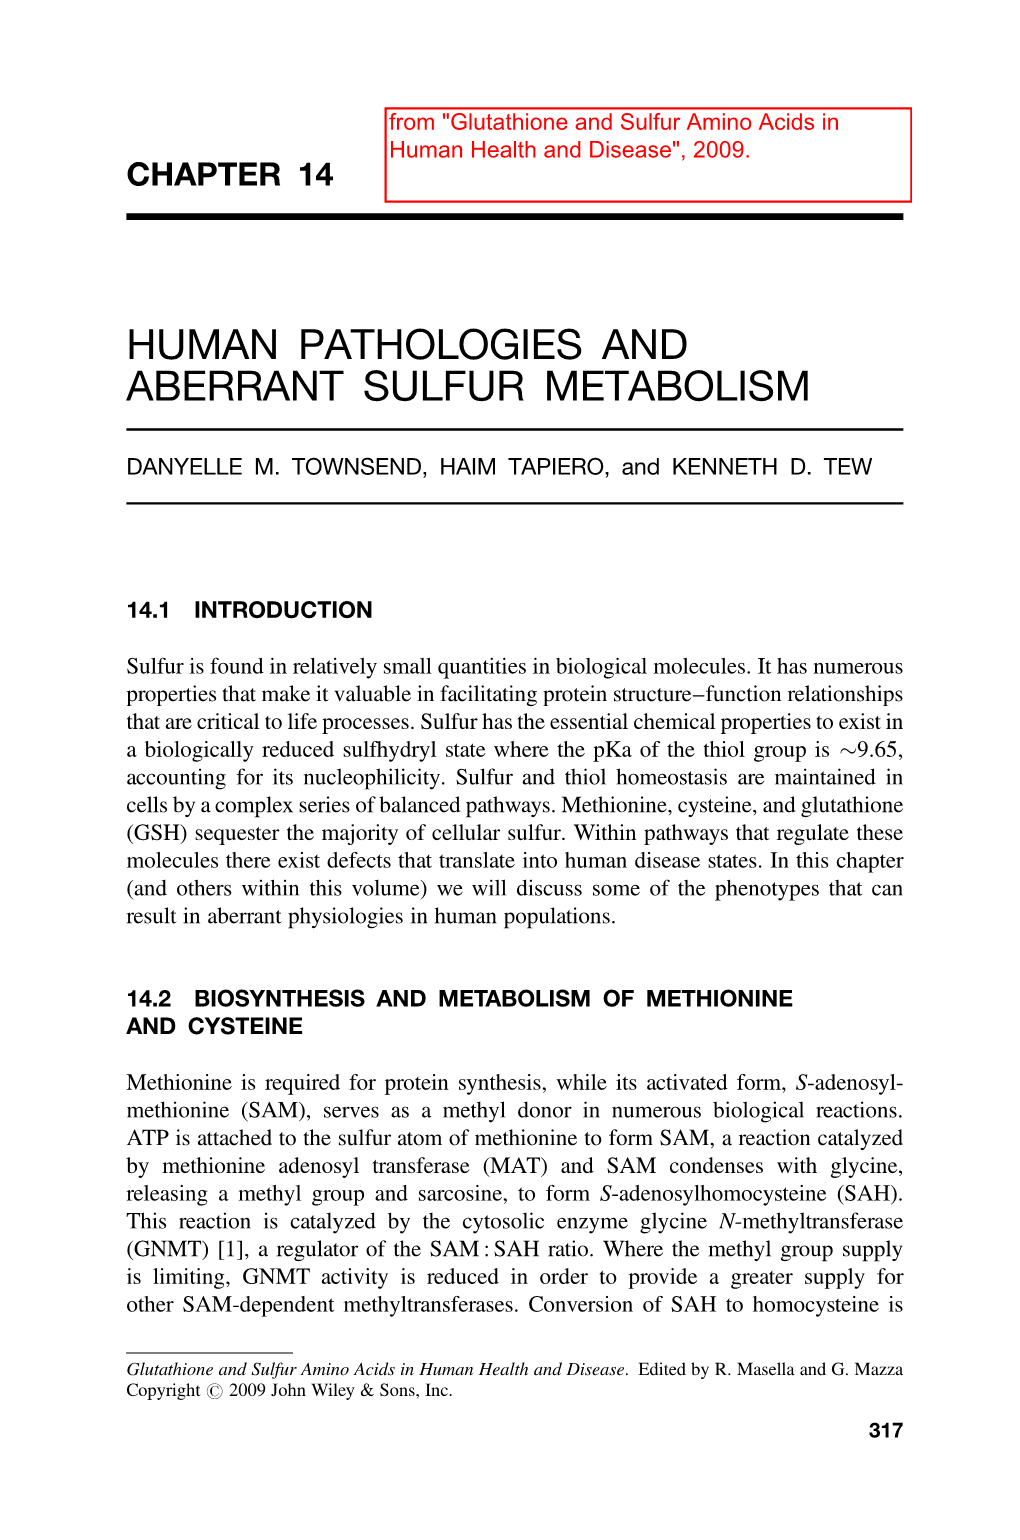 Human Pathologies and Aberrant Sulfur Metabolism from Glutathione